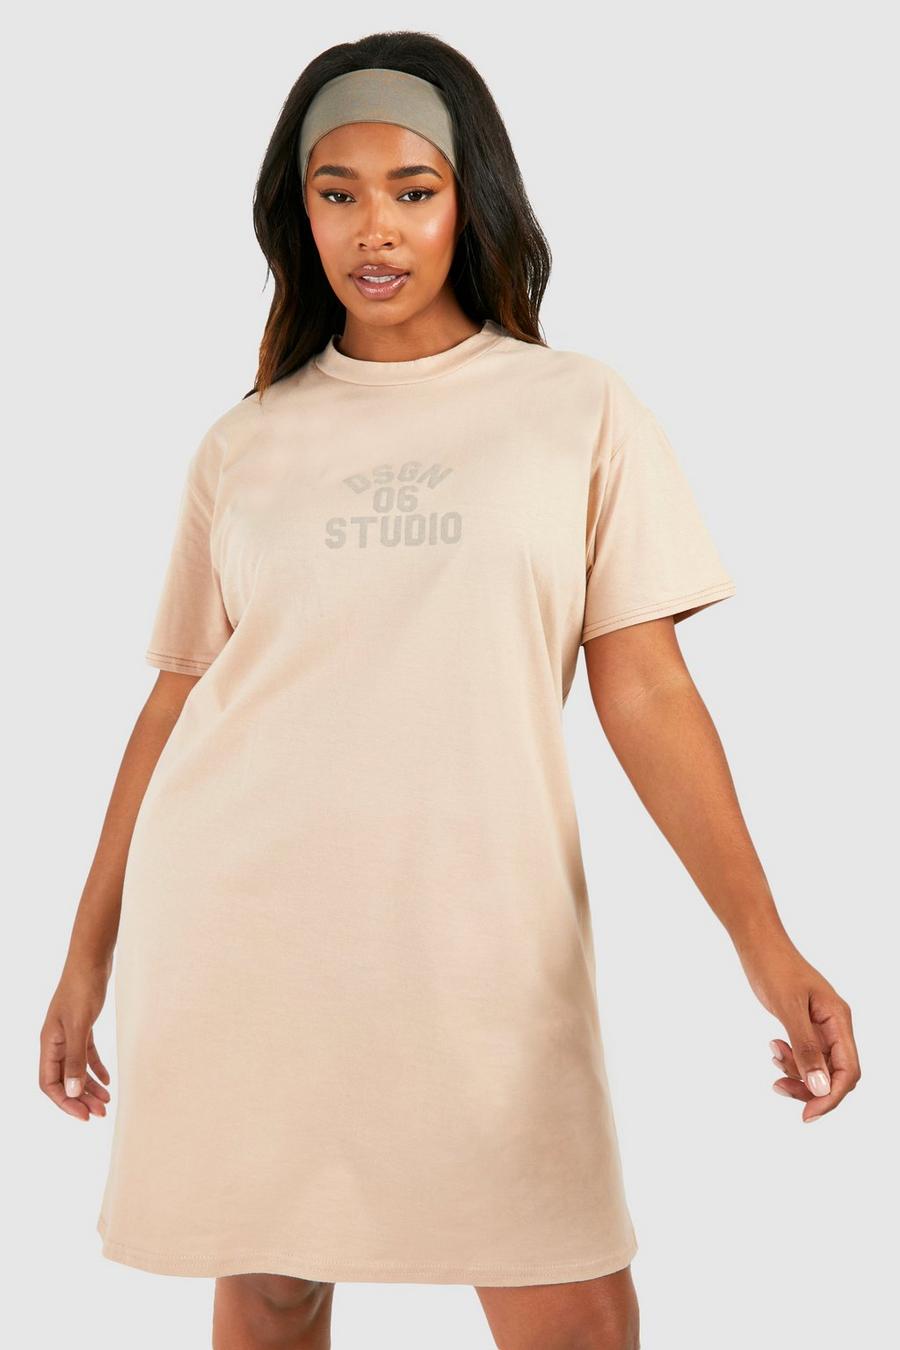 Grande taille - Robe t-shirt à slogan Dsgn Studio, Stone image number 1